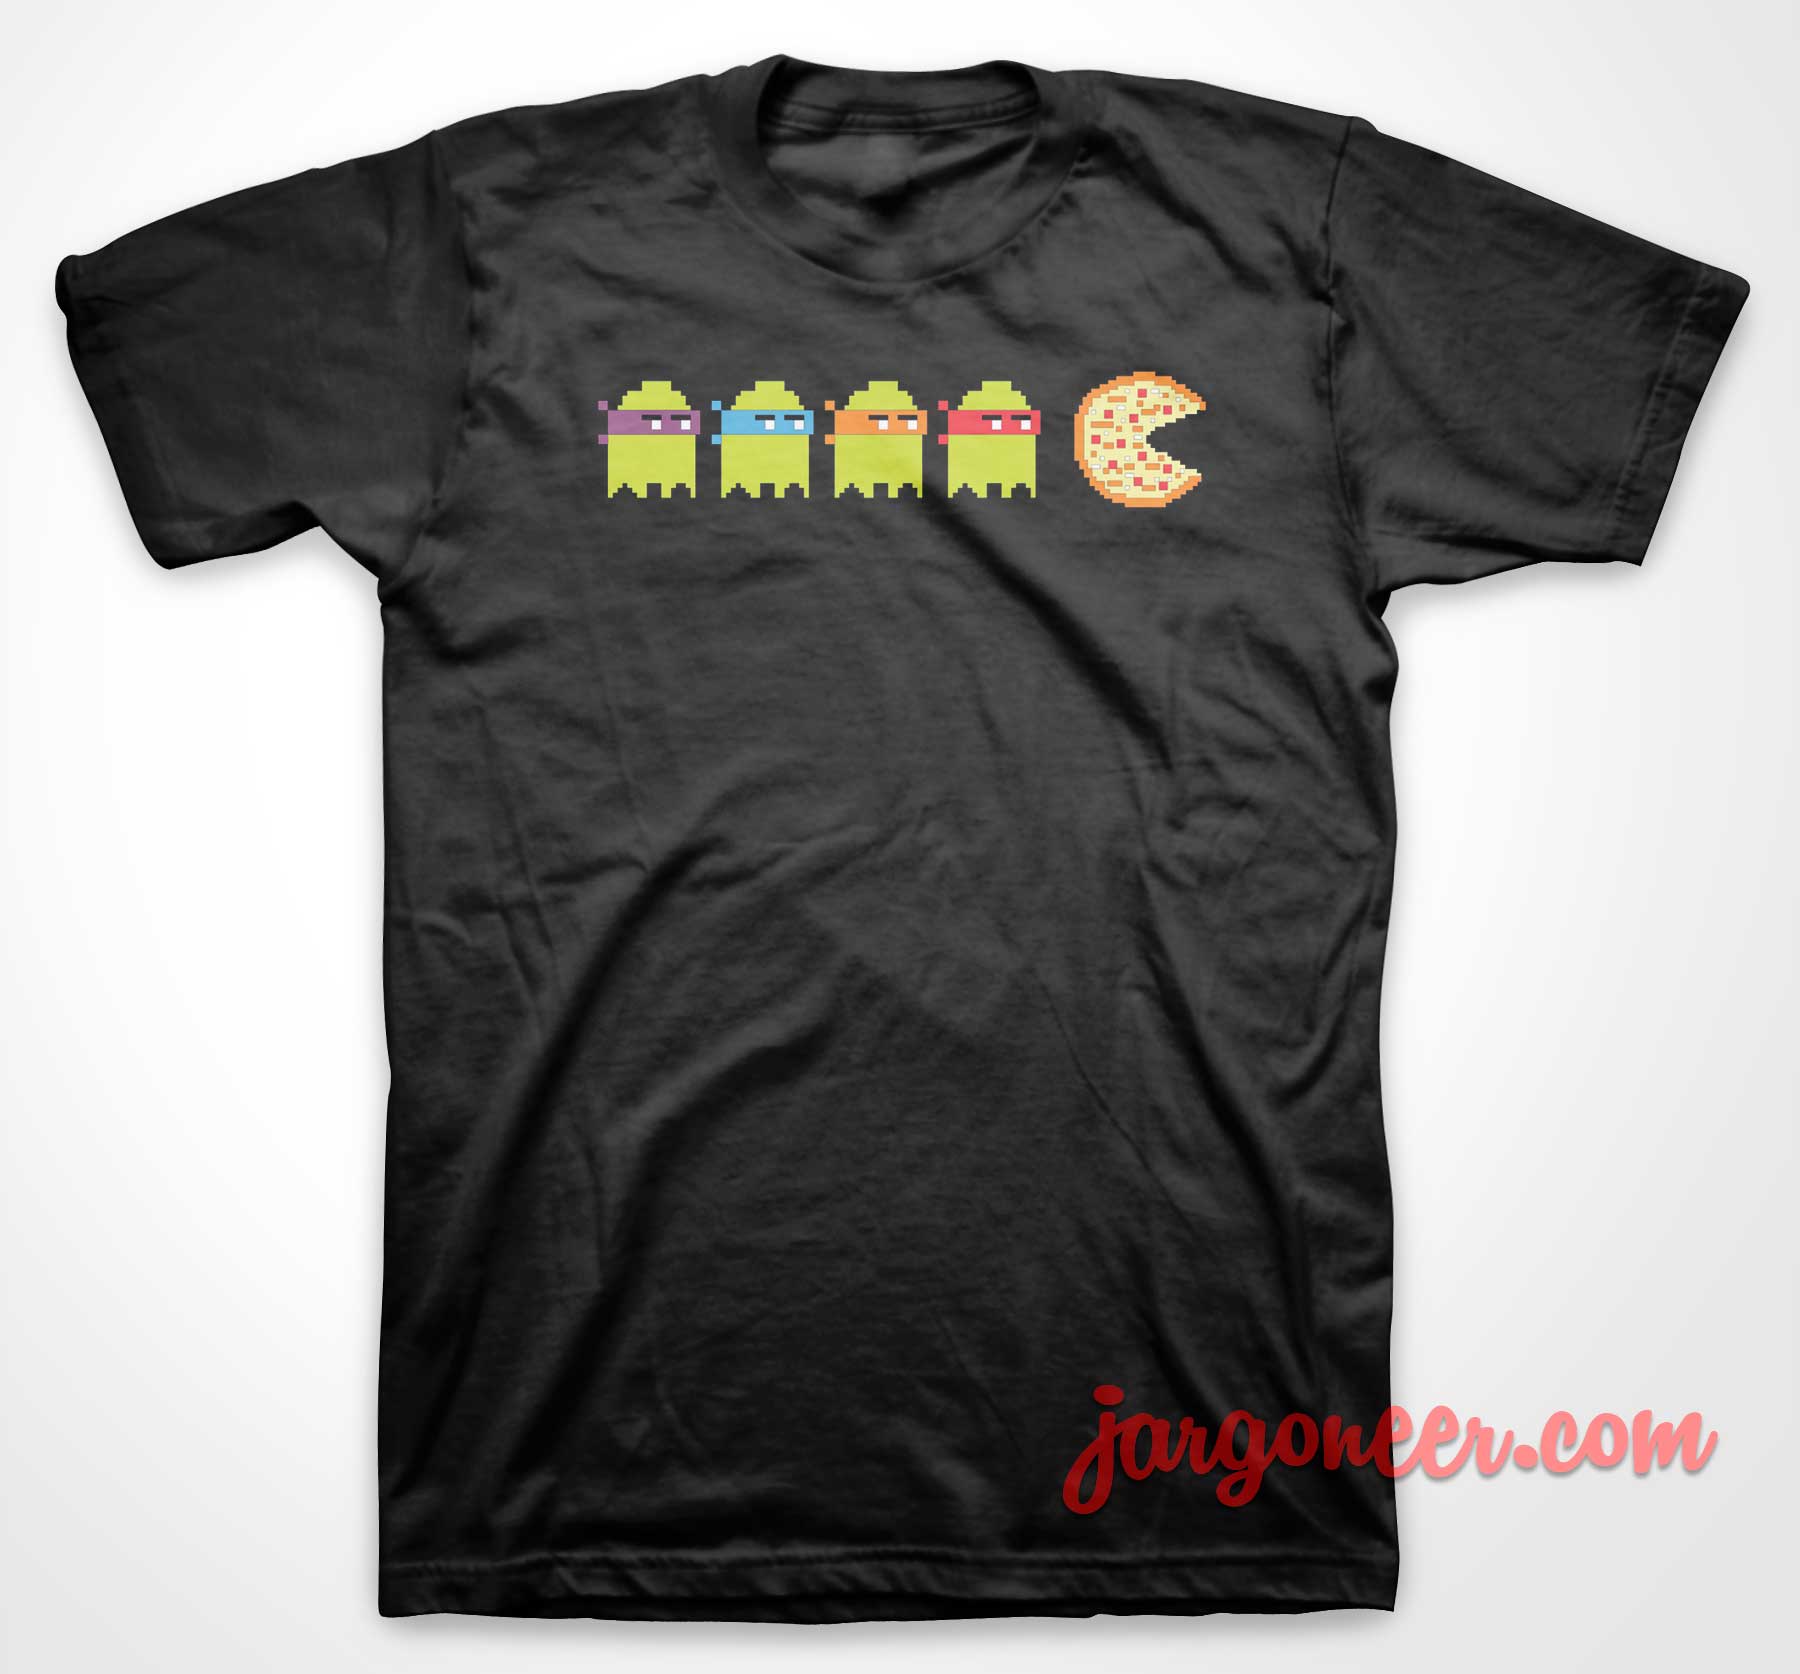 Teenage Mutant Ninja Ghosts - Shop Unique Graphic Cool Shirt Designs